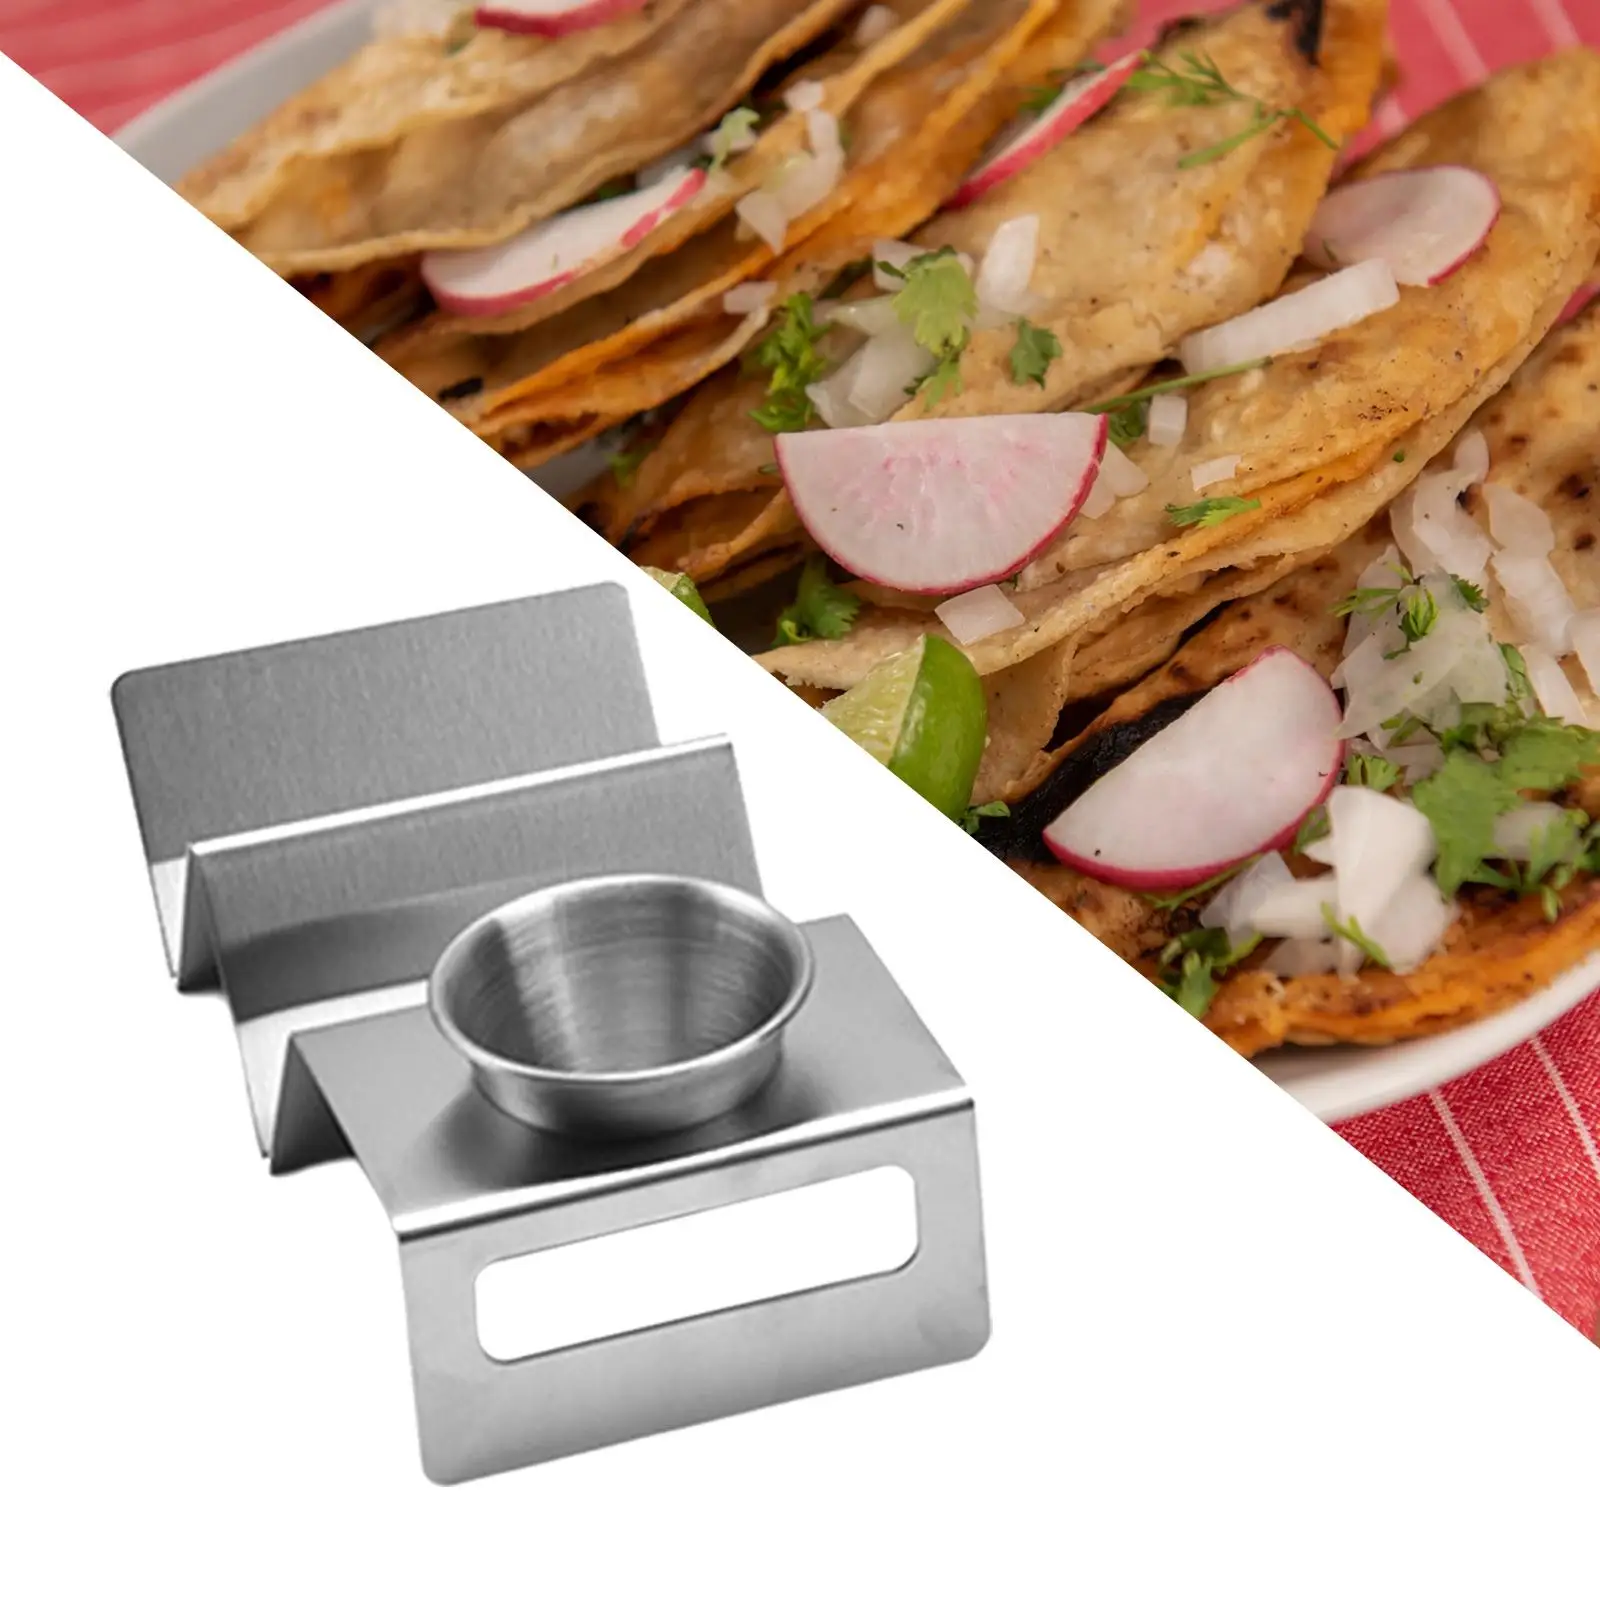 Stainless Steel  Tray Holder Server  Shape Hot Dog Holder  Rack  for Picnic, Party, Festivals Pancakes Tortillas Oven Grill